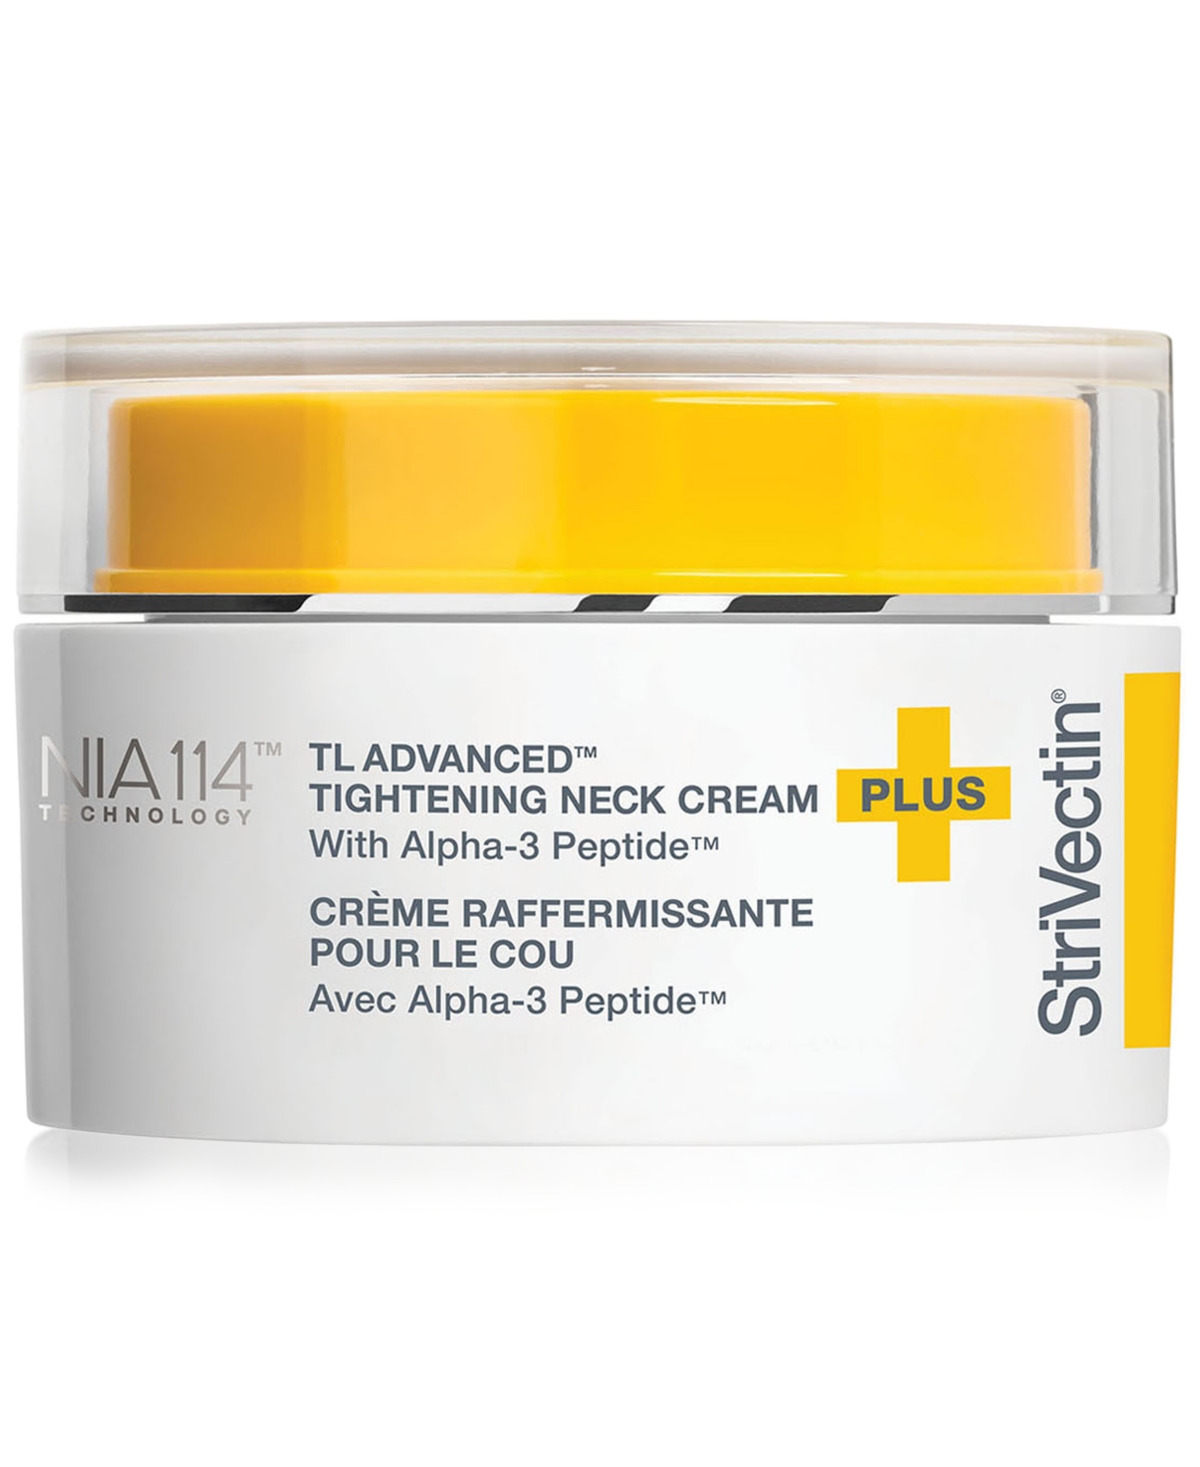 Tl Advanced Tightening Neck Cream Plus With Alpha-3 Peptide, 1.7 oz.